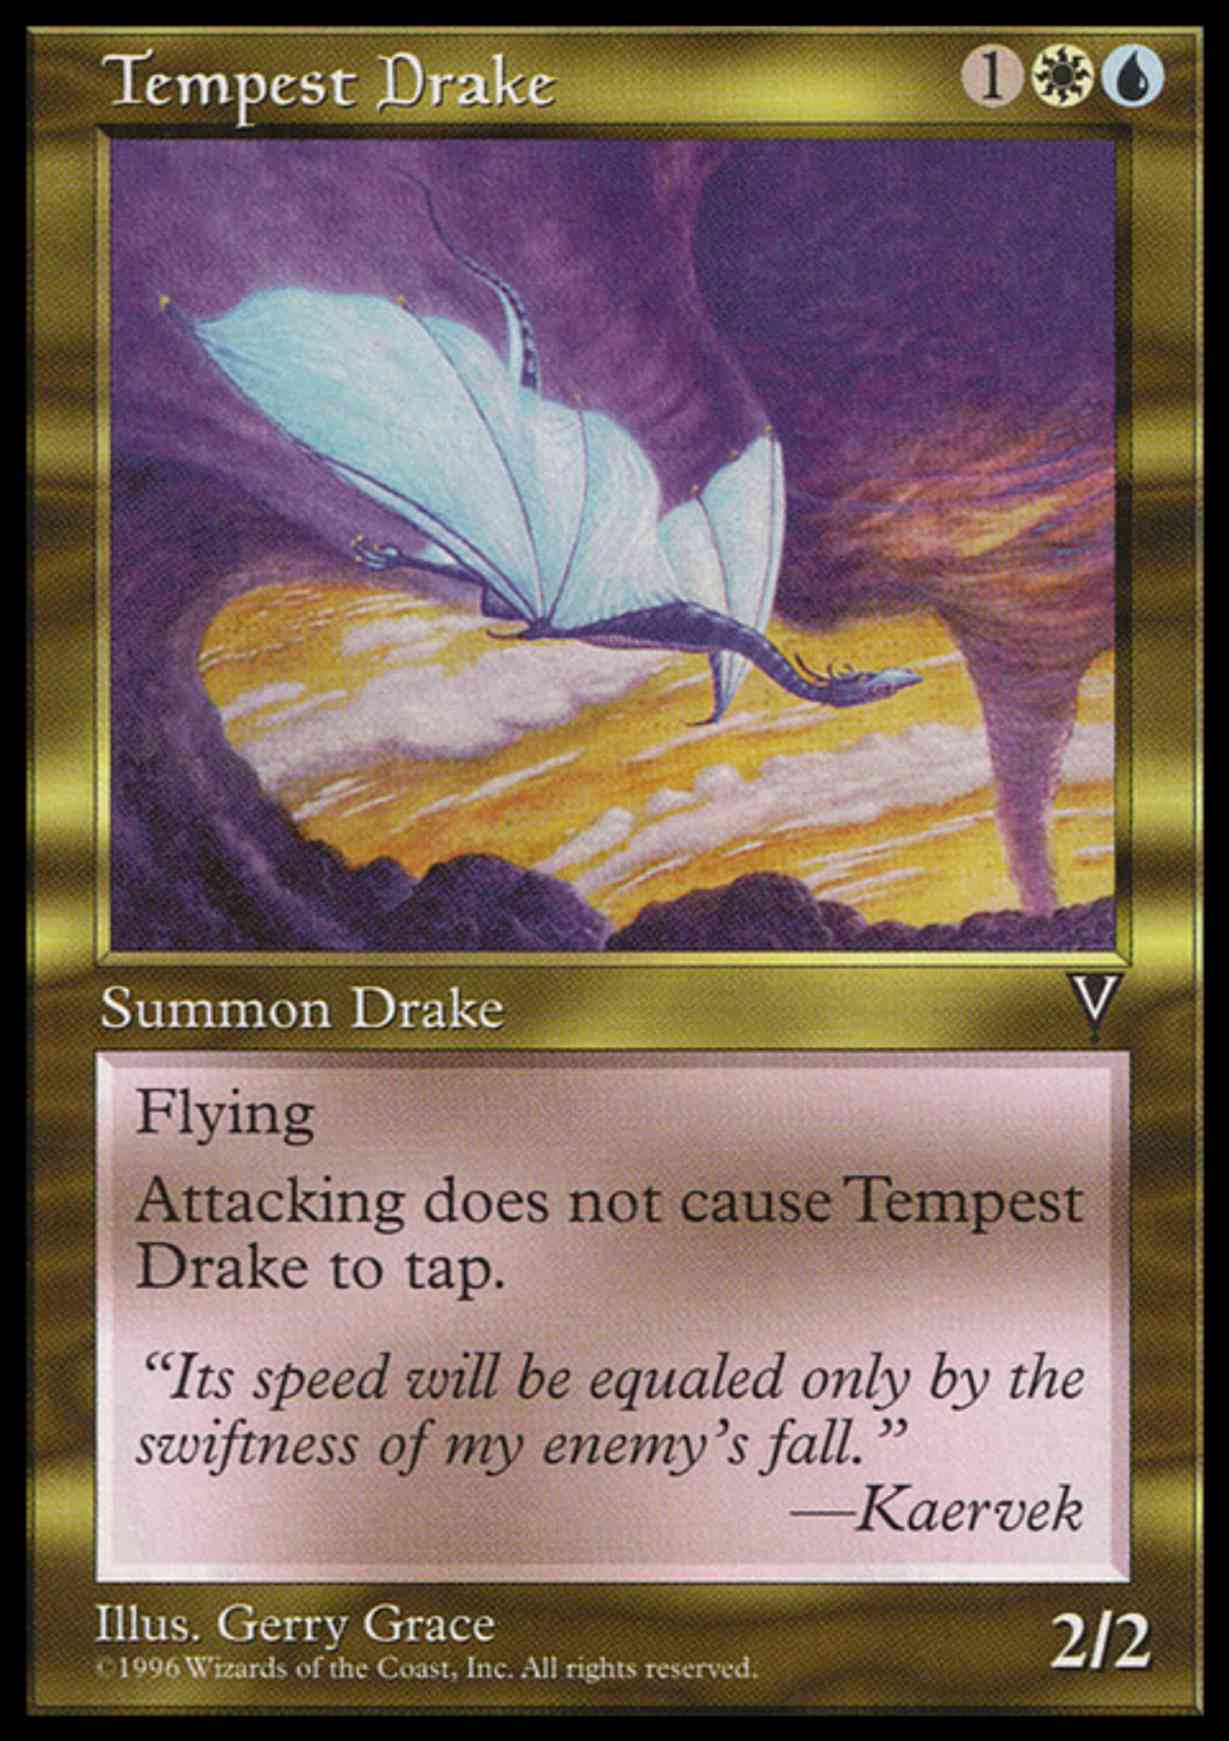 Tempest Drake magic card front